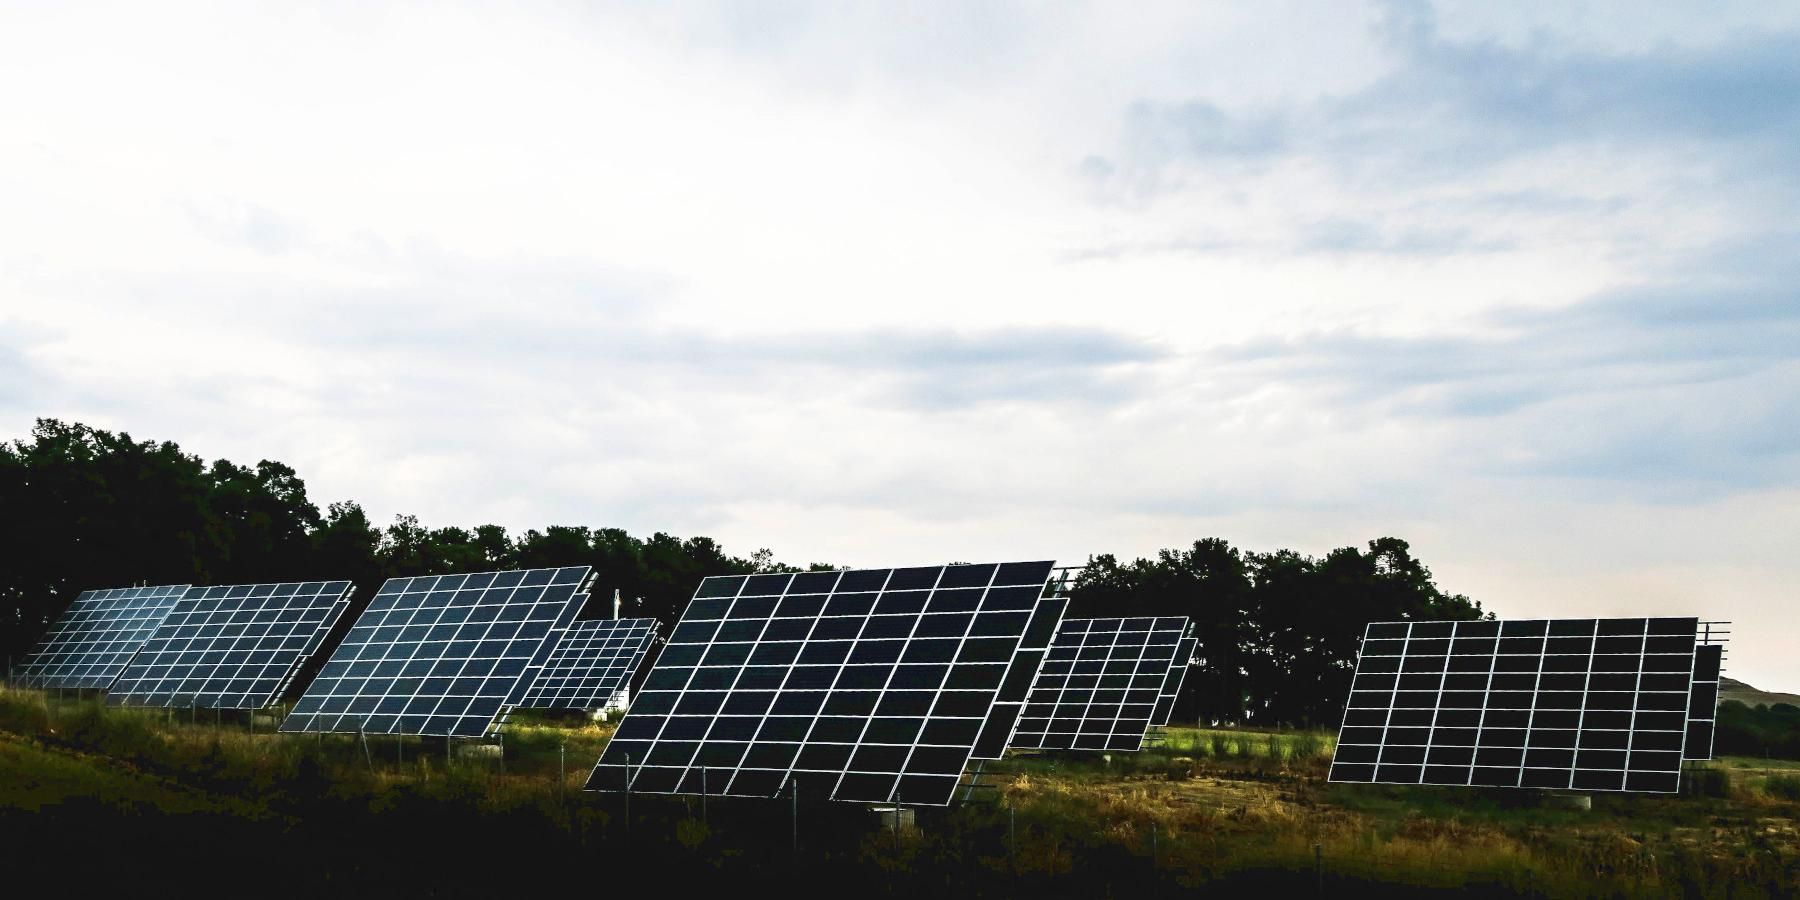 Solar panels that generate renewable energy